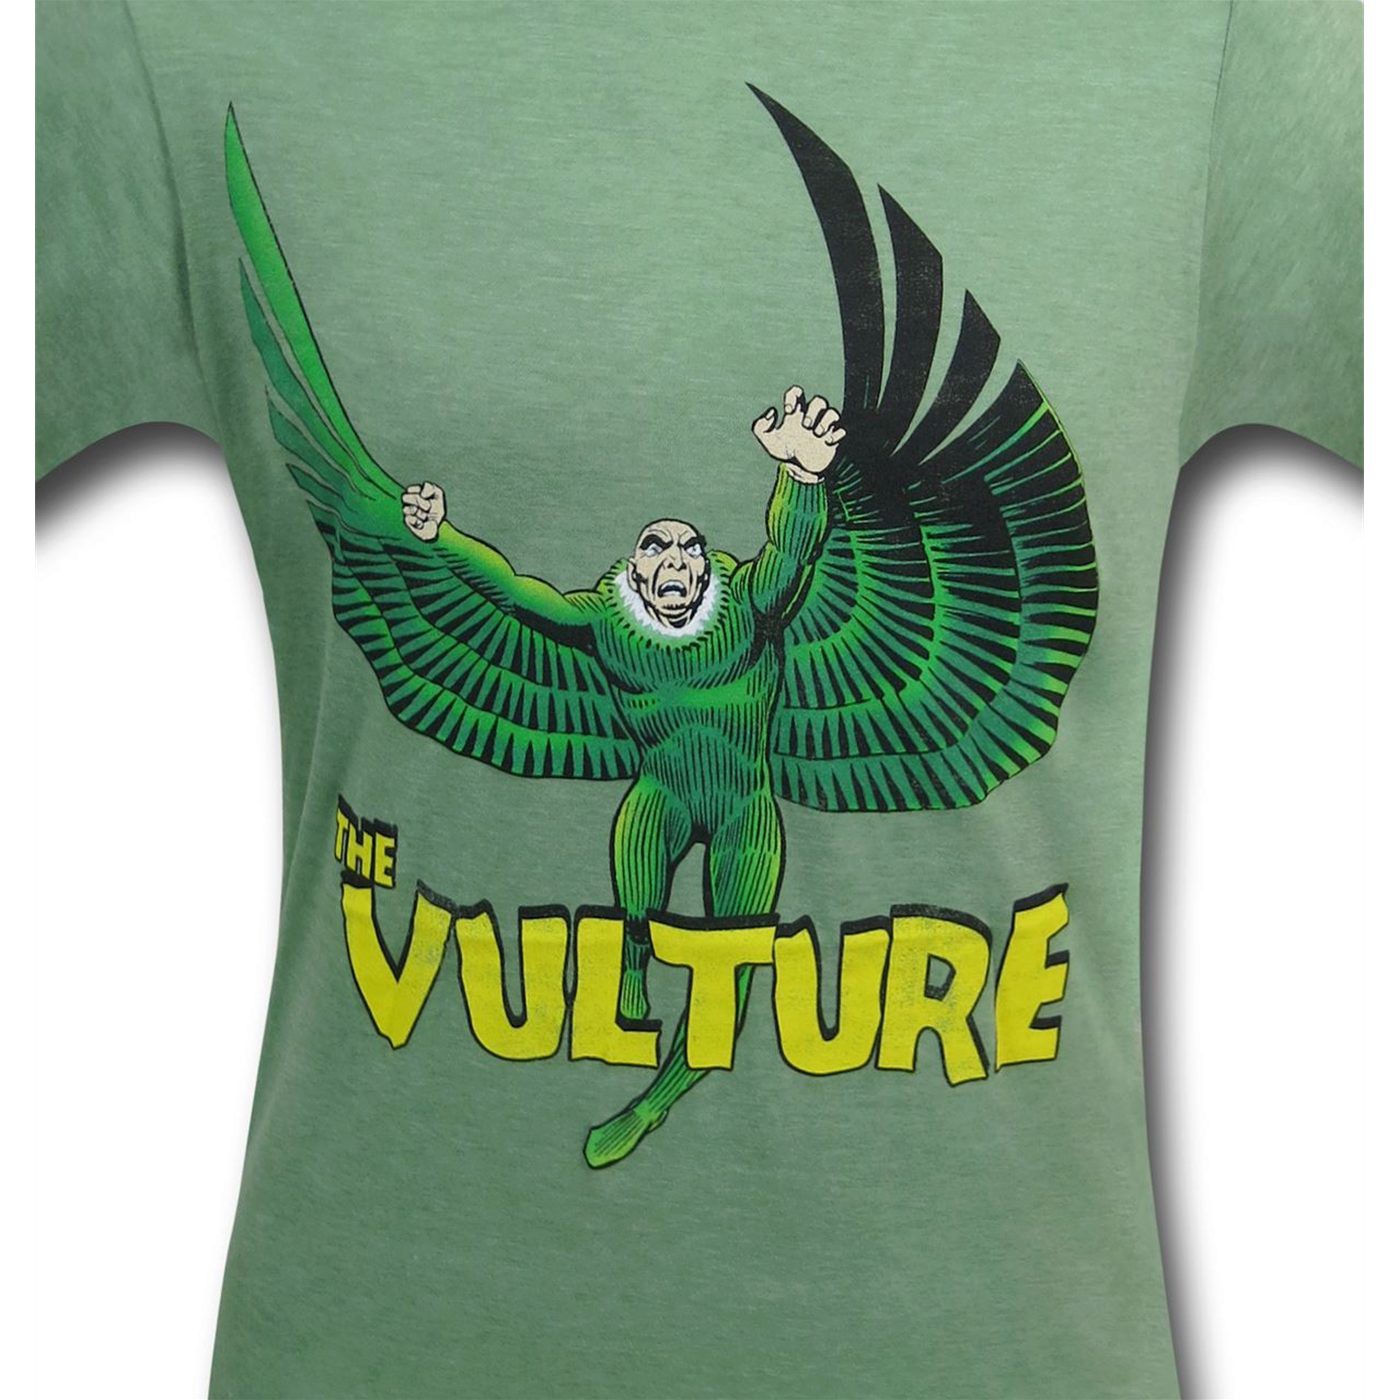 Vulture Wingspan Men's T-Shirt